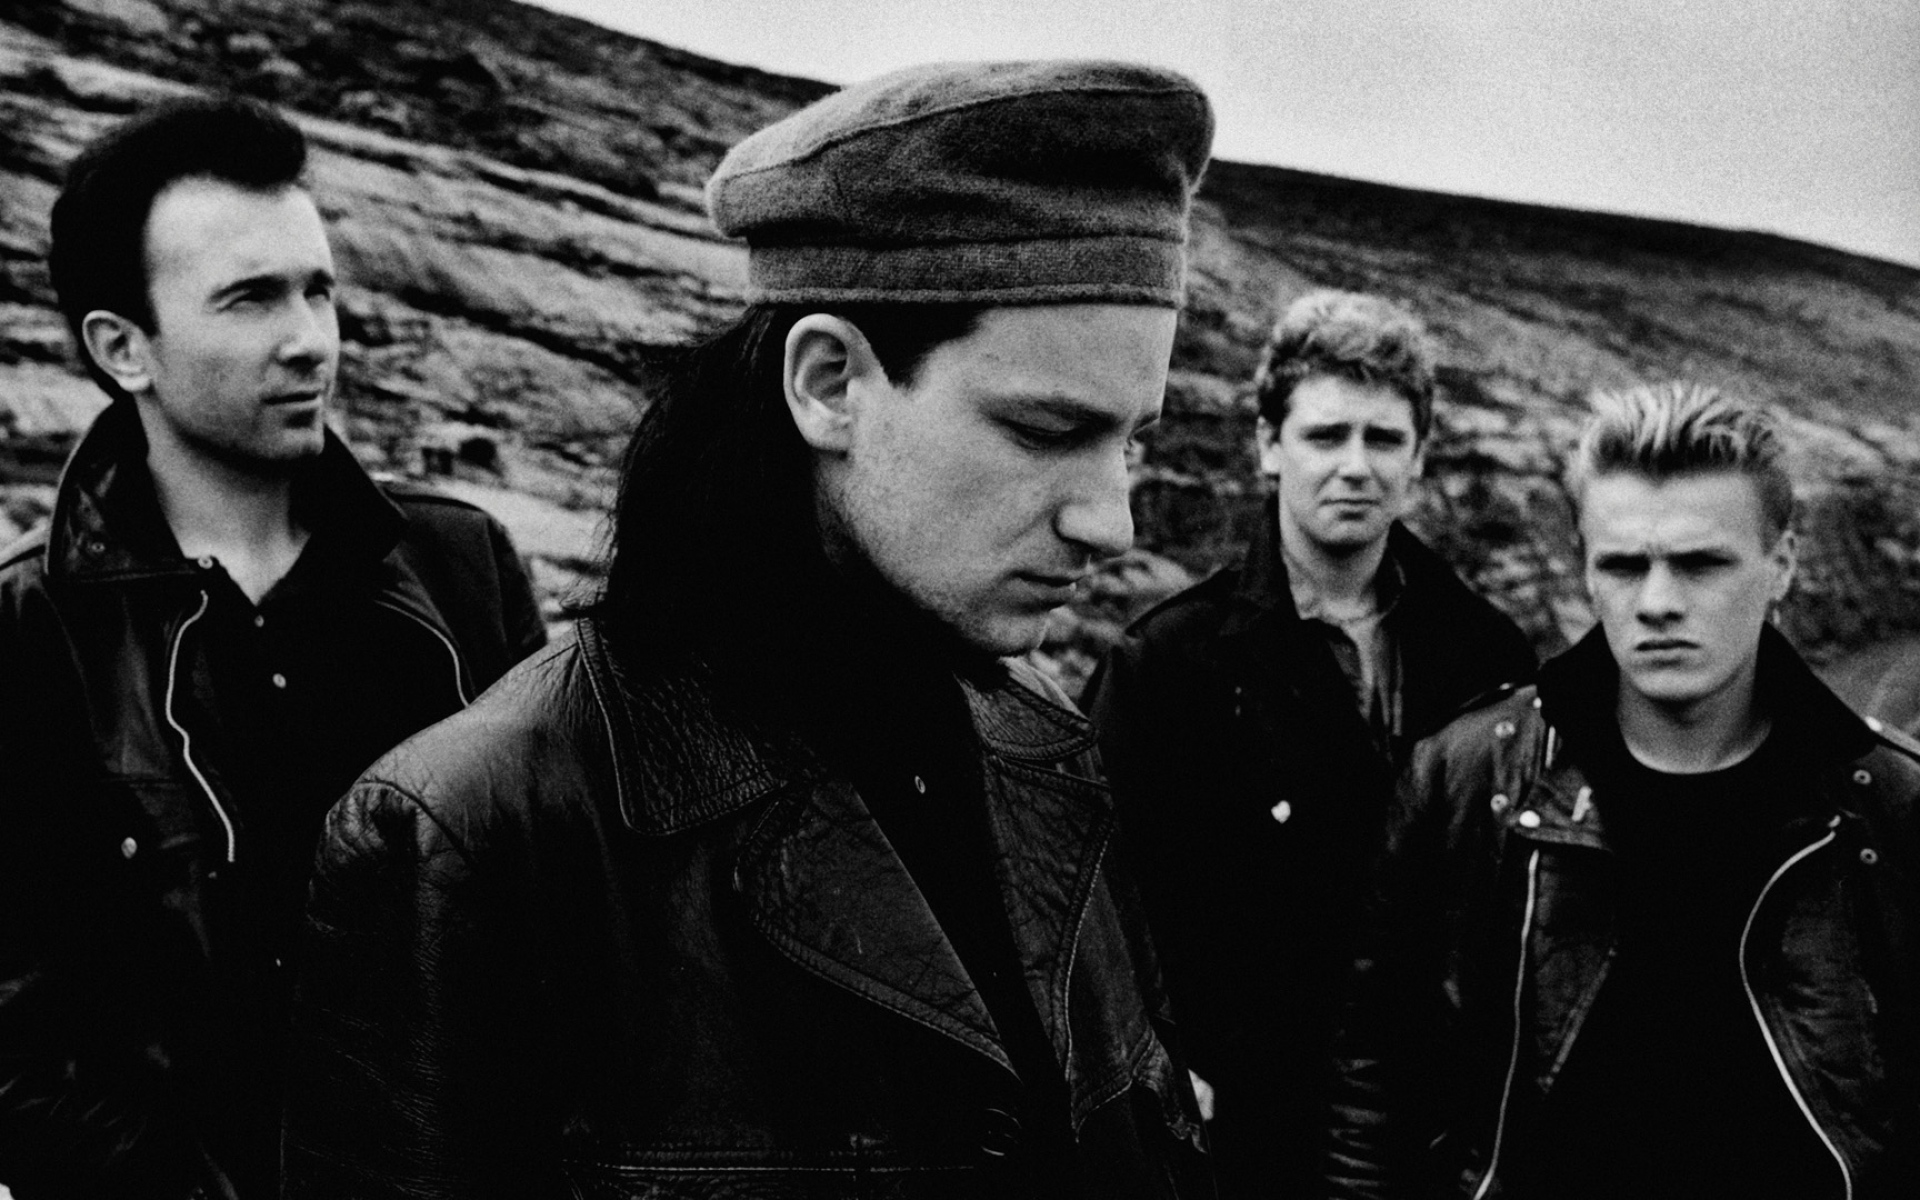 U 2 2 16 0. U2 Band. Группа u2. U2 группа в молодости. U2 1989.